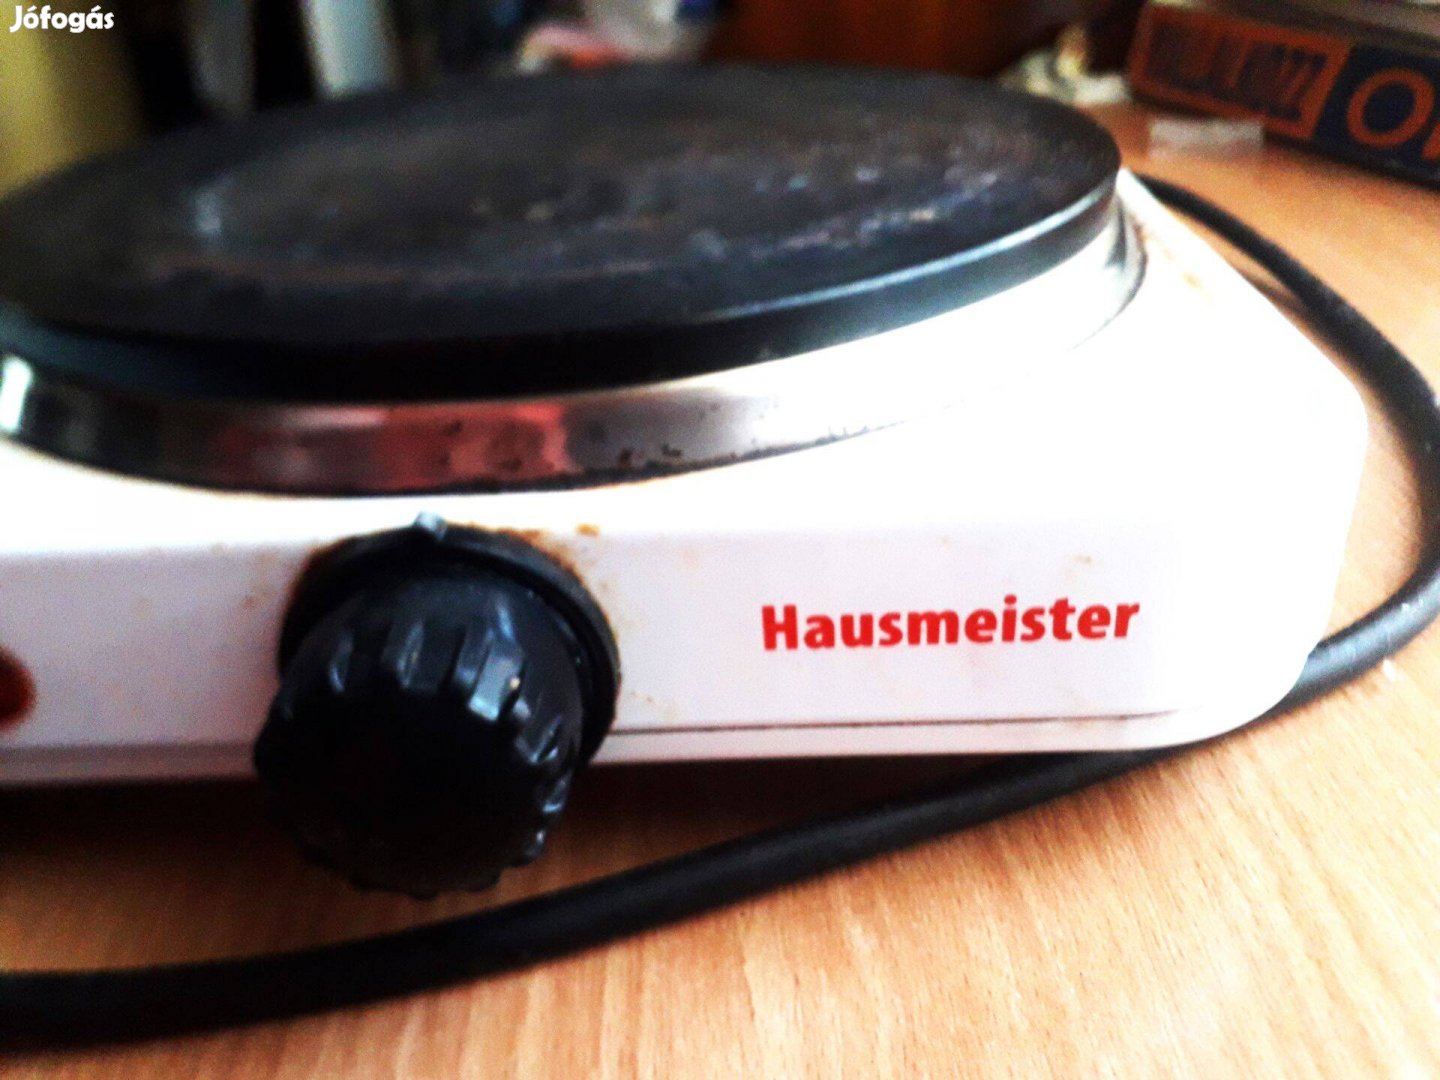 Hausmeister HM 6131 főzőlap